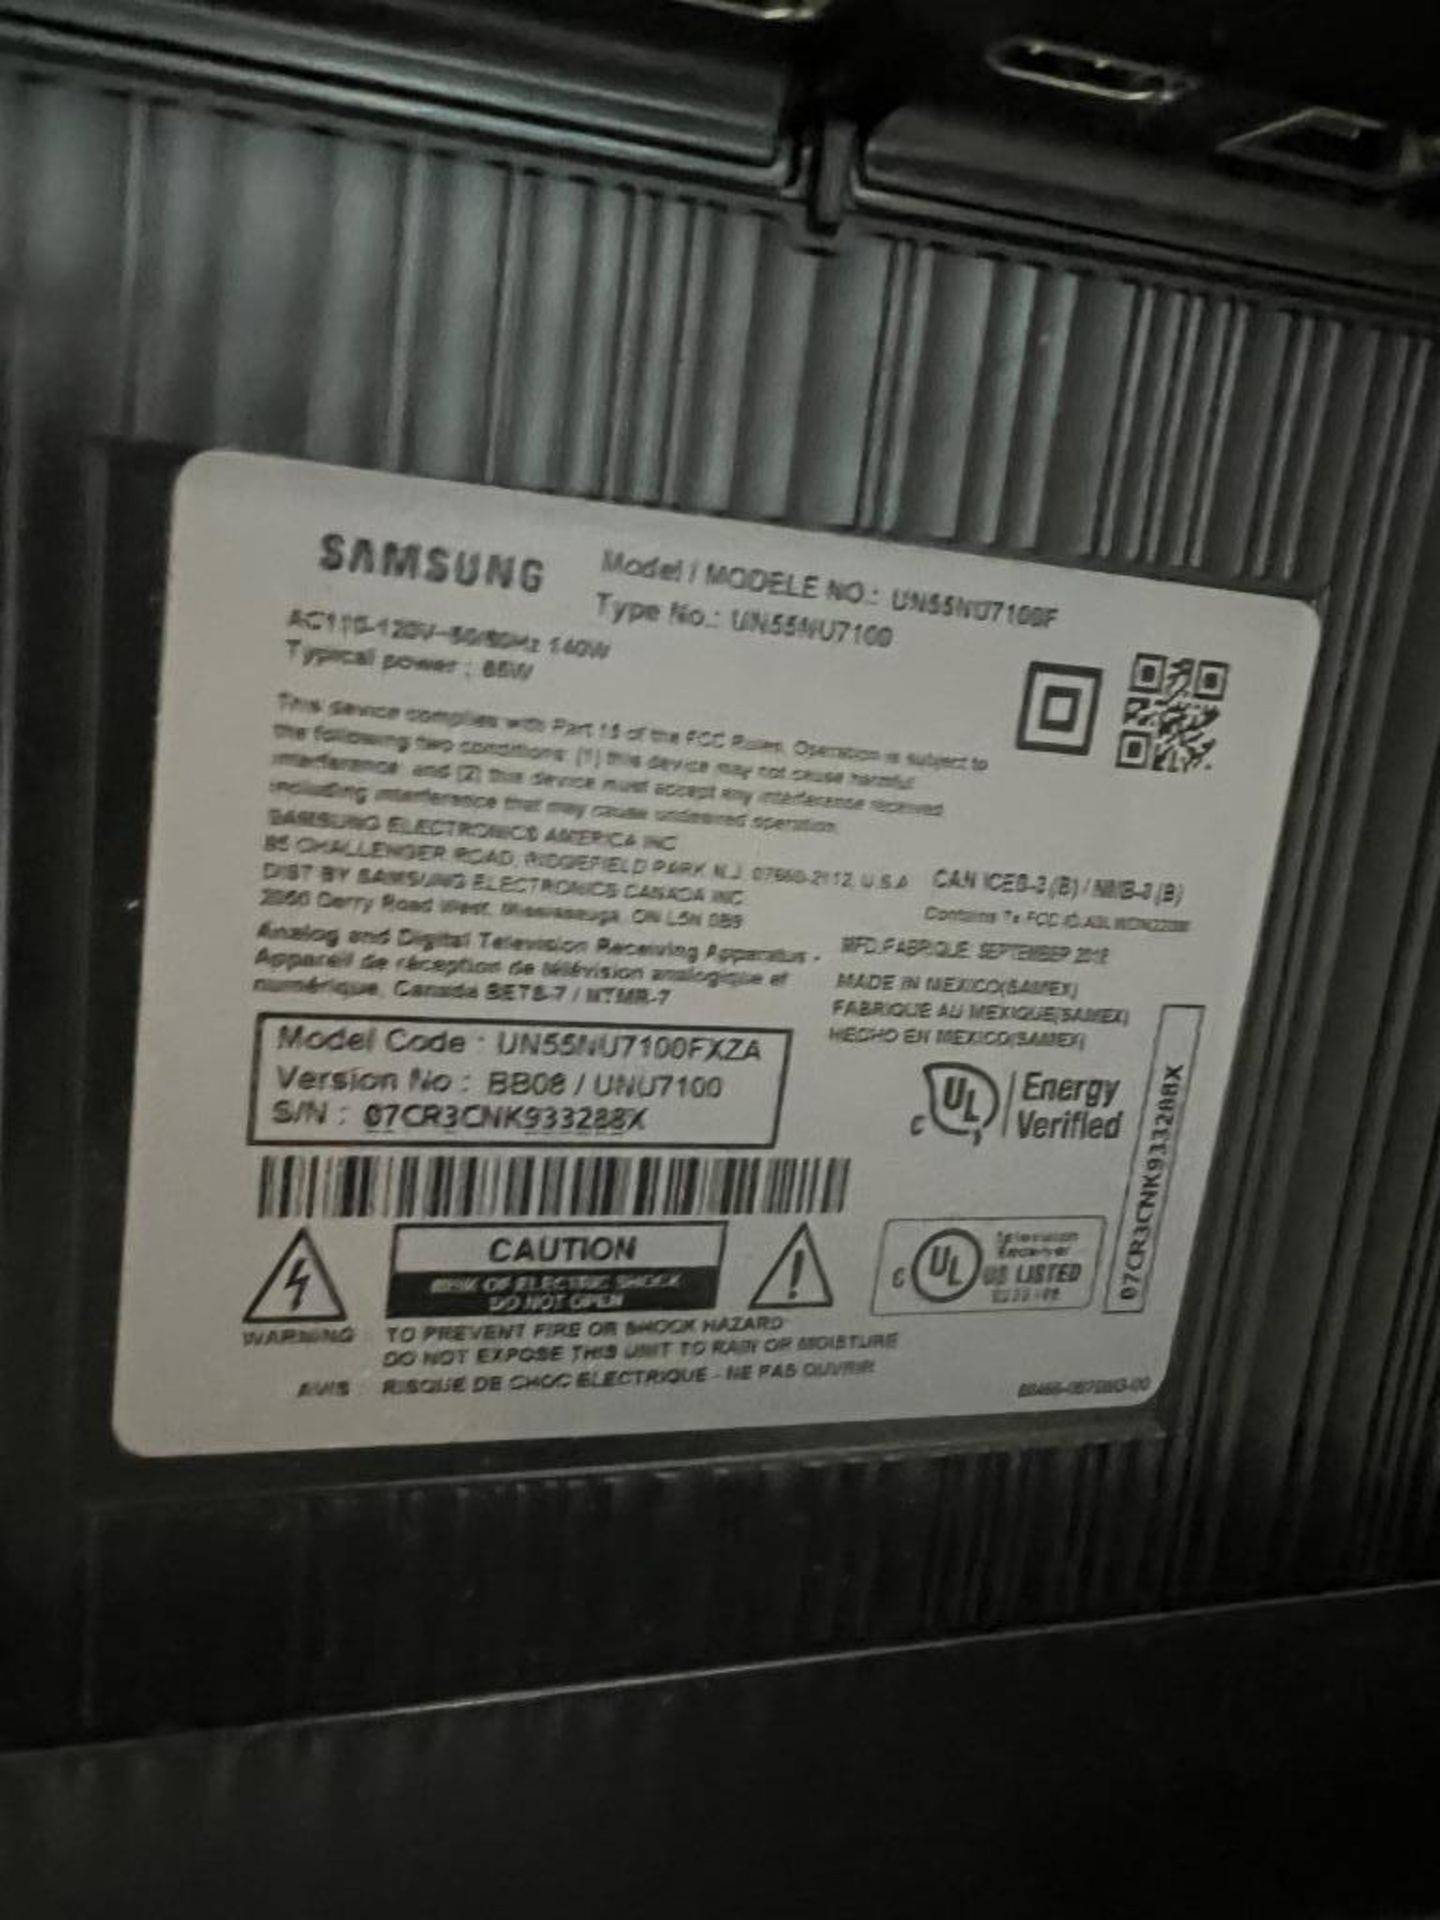 Samsung 55" TV - Image 3 of 3